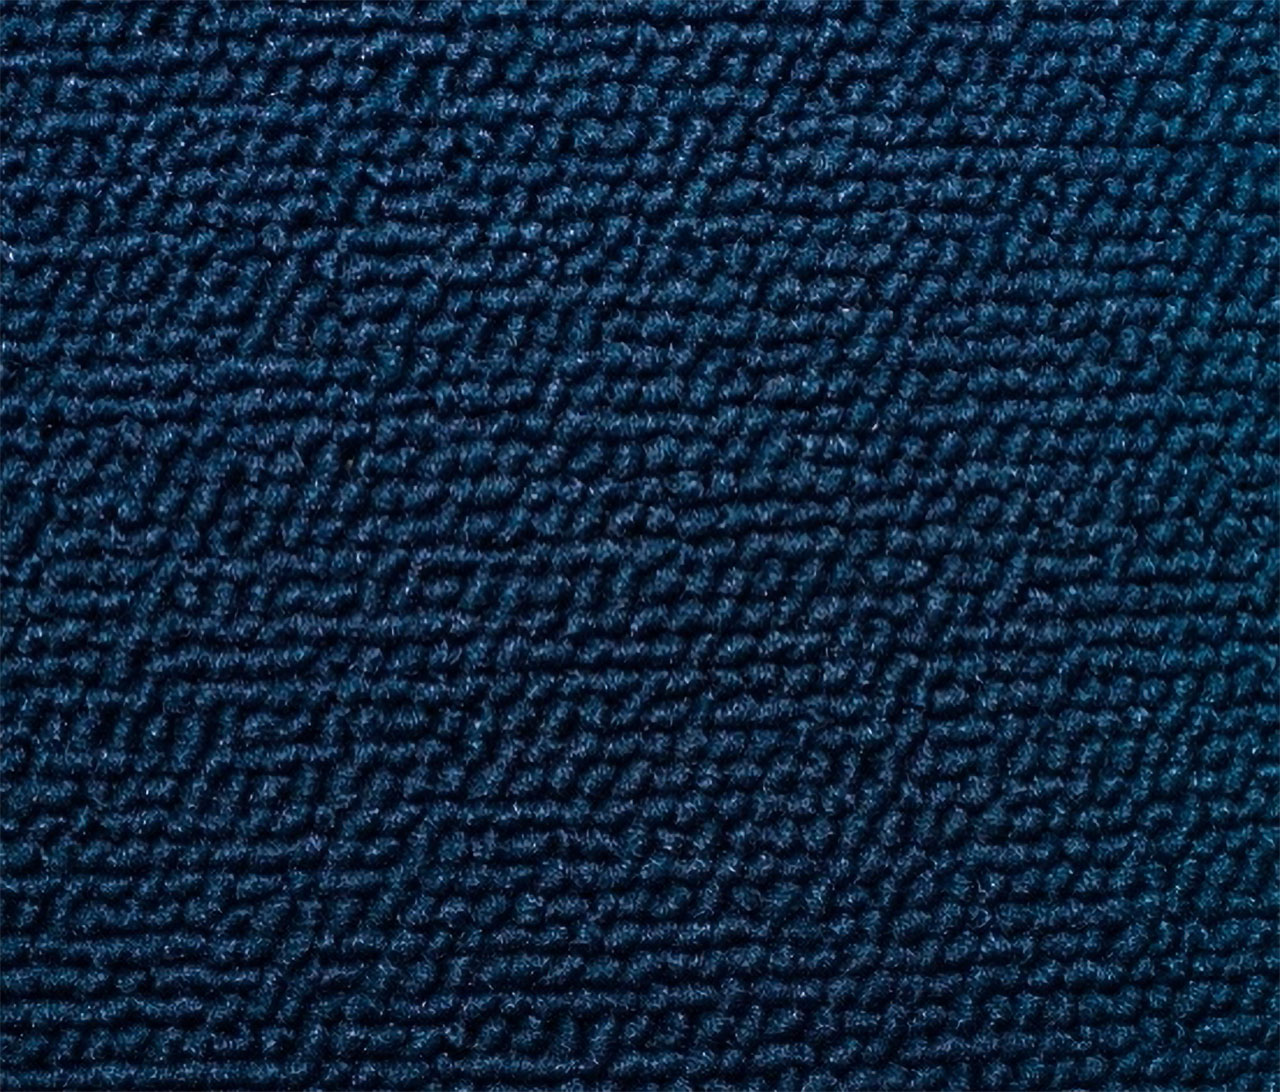 Holden Standard EH Standard Wagon C24 Columbine Blue Carpet (Image 1 of 1)